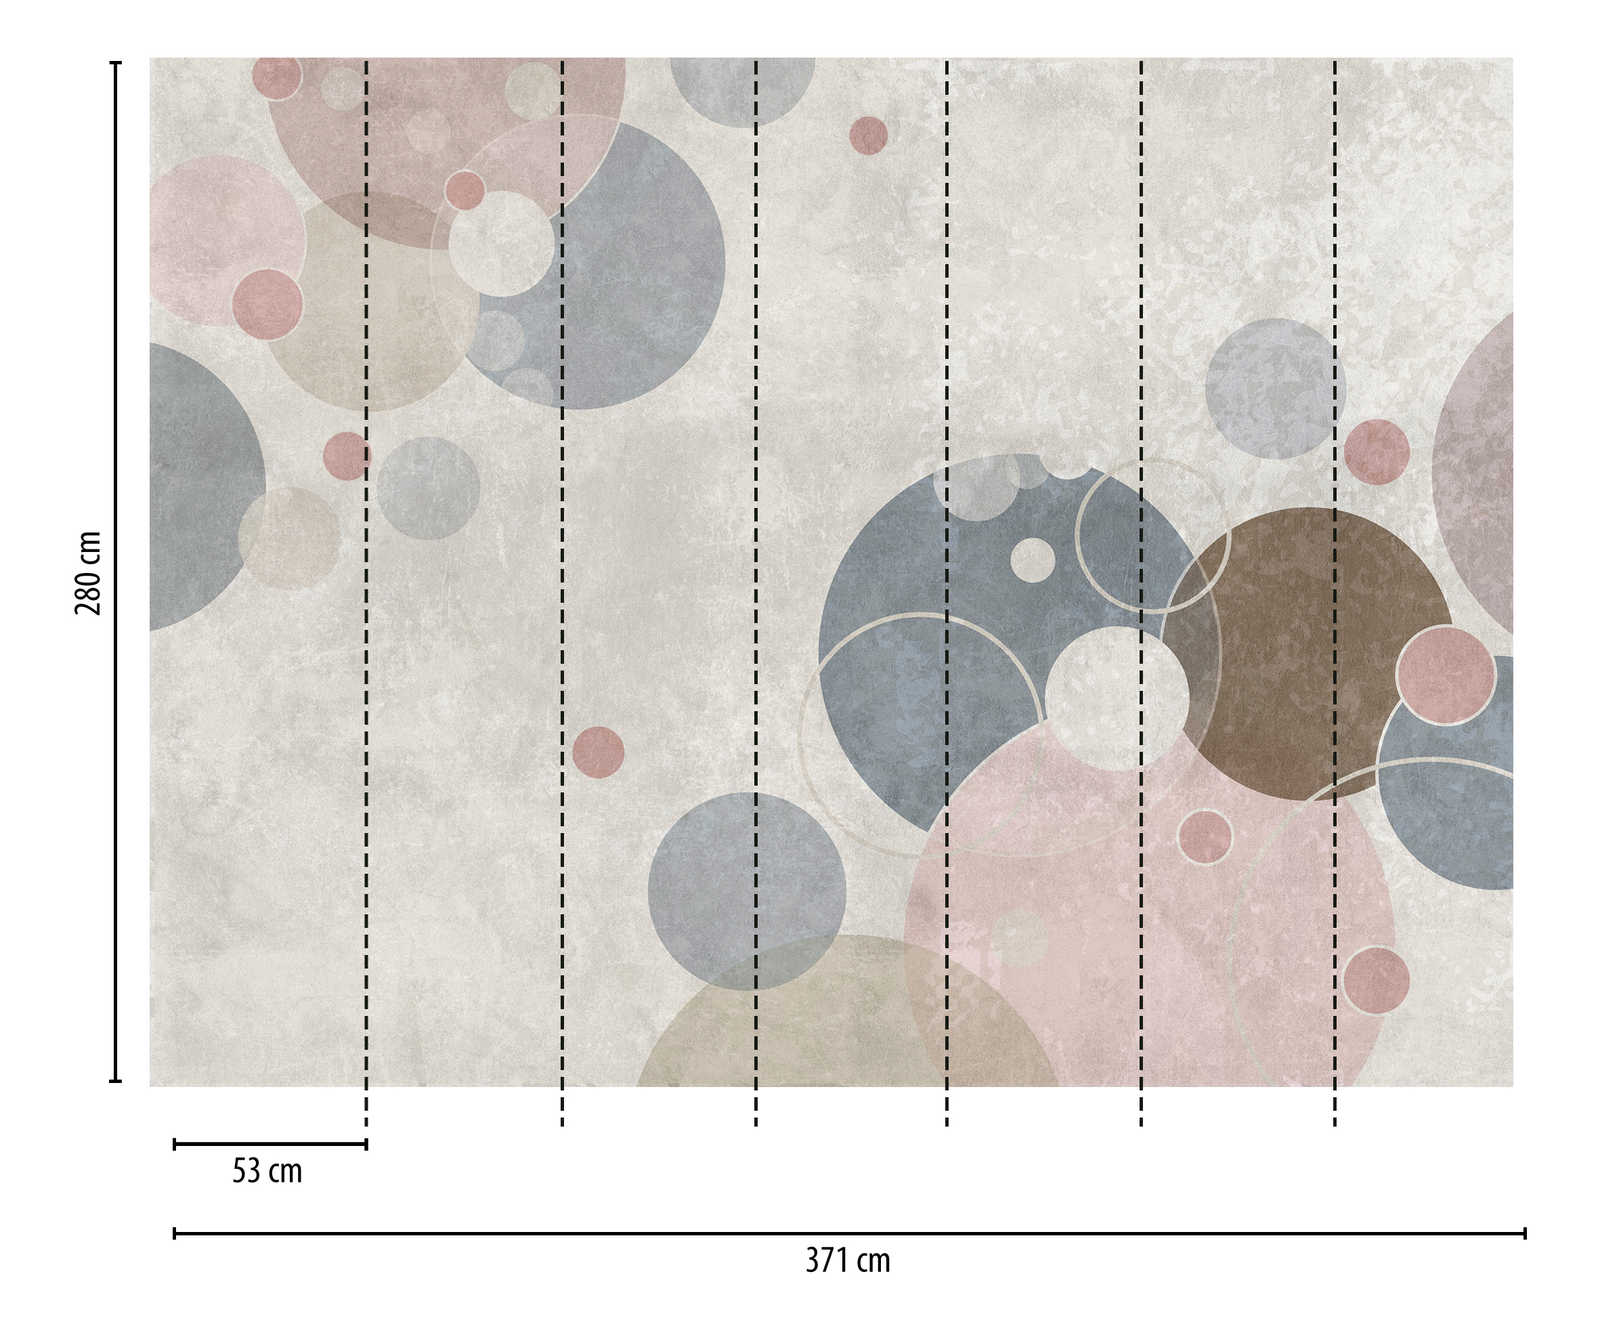             behang nieuwigheid - motief behang cirkel patroon abstract in modern design
        